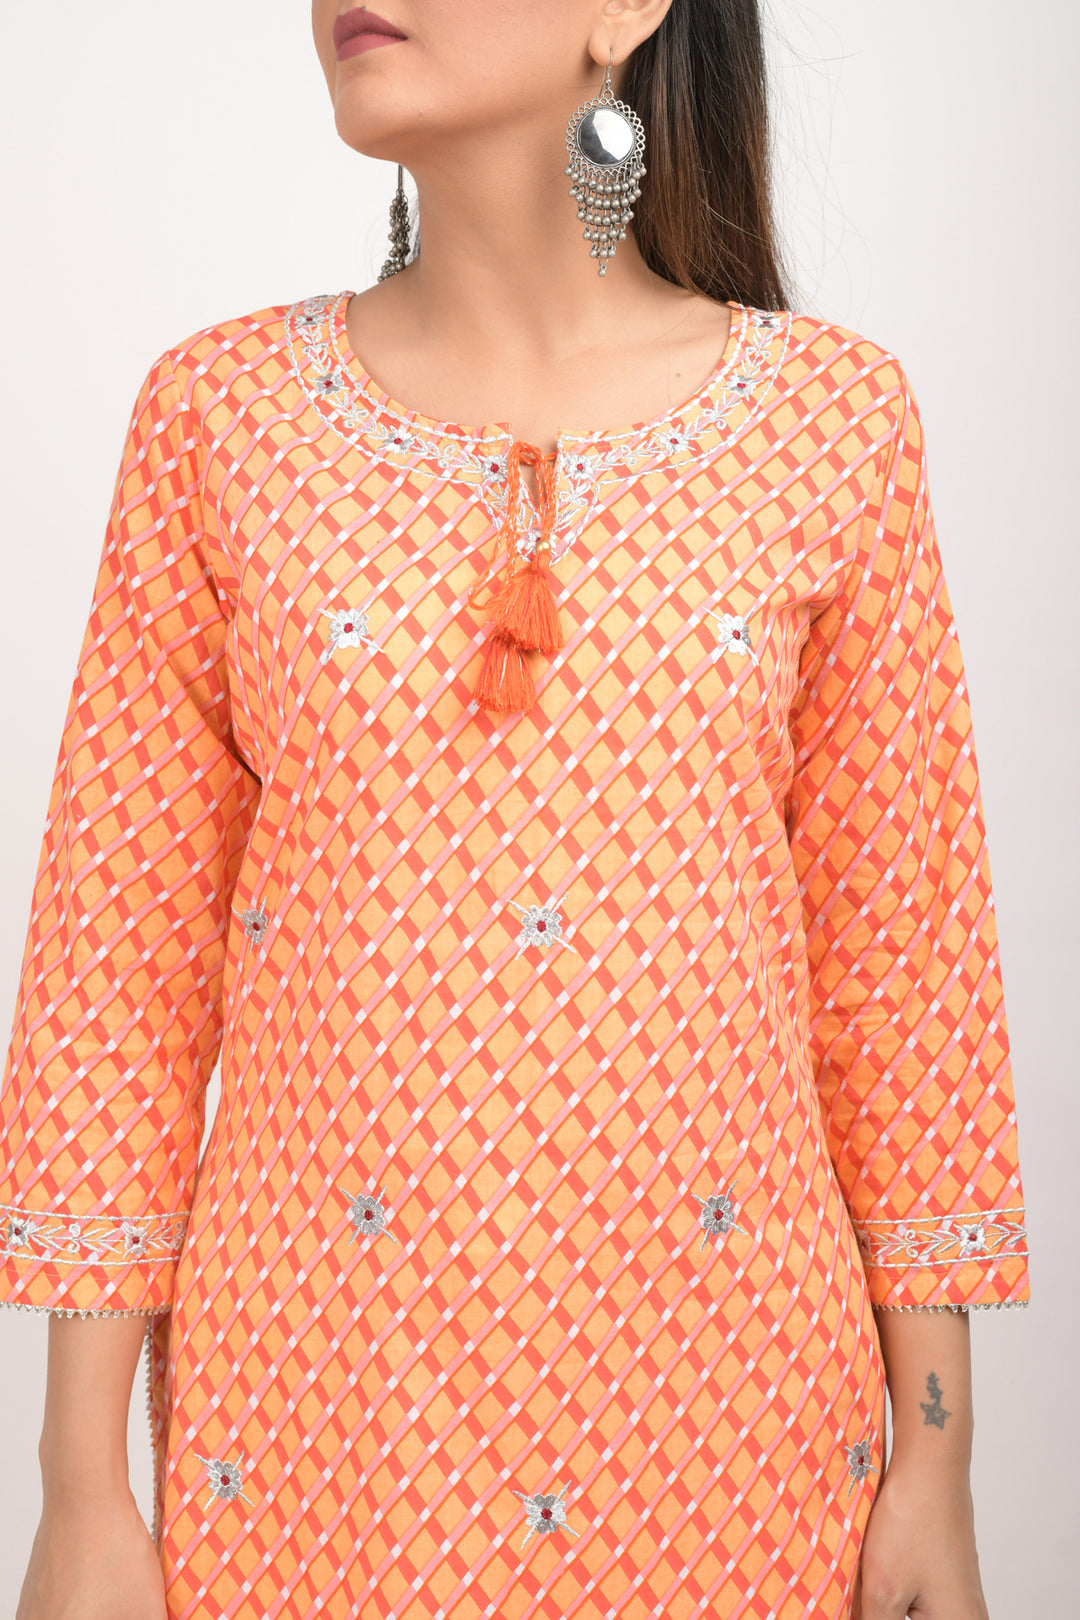 Buy Orange Leheria Ladies Kurti Online in India | Designer Kurta for Women